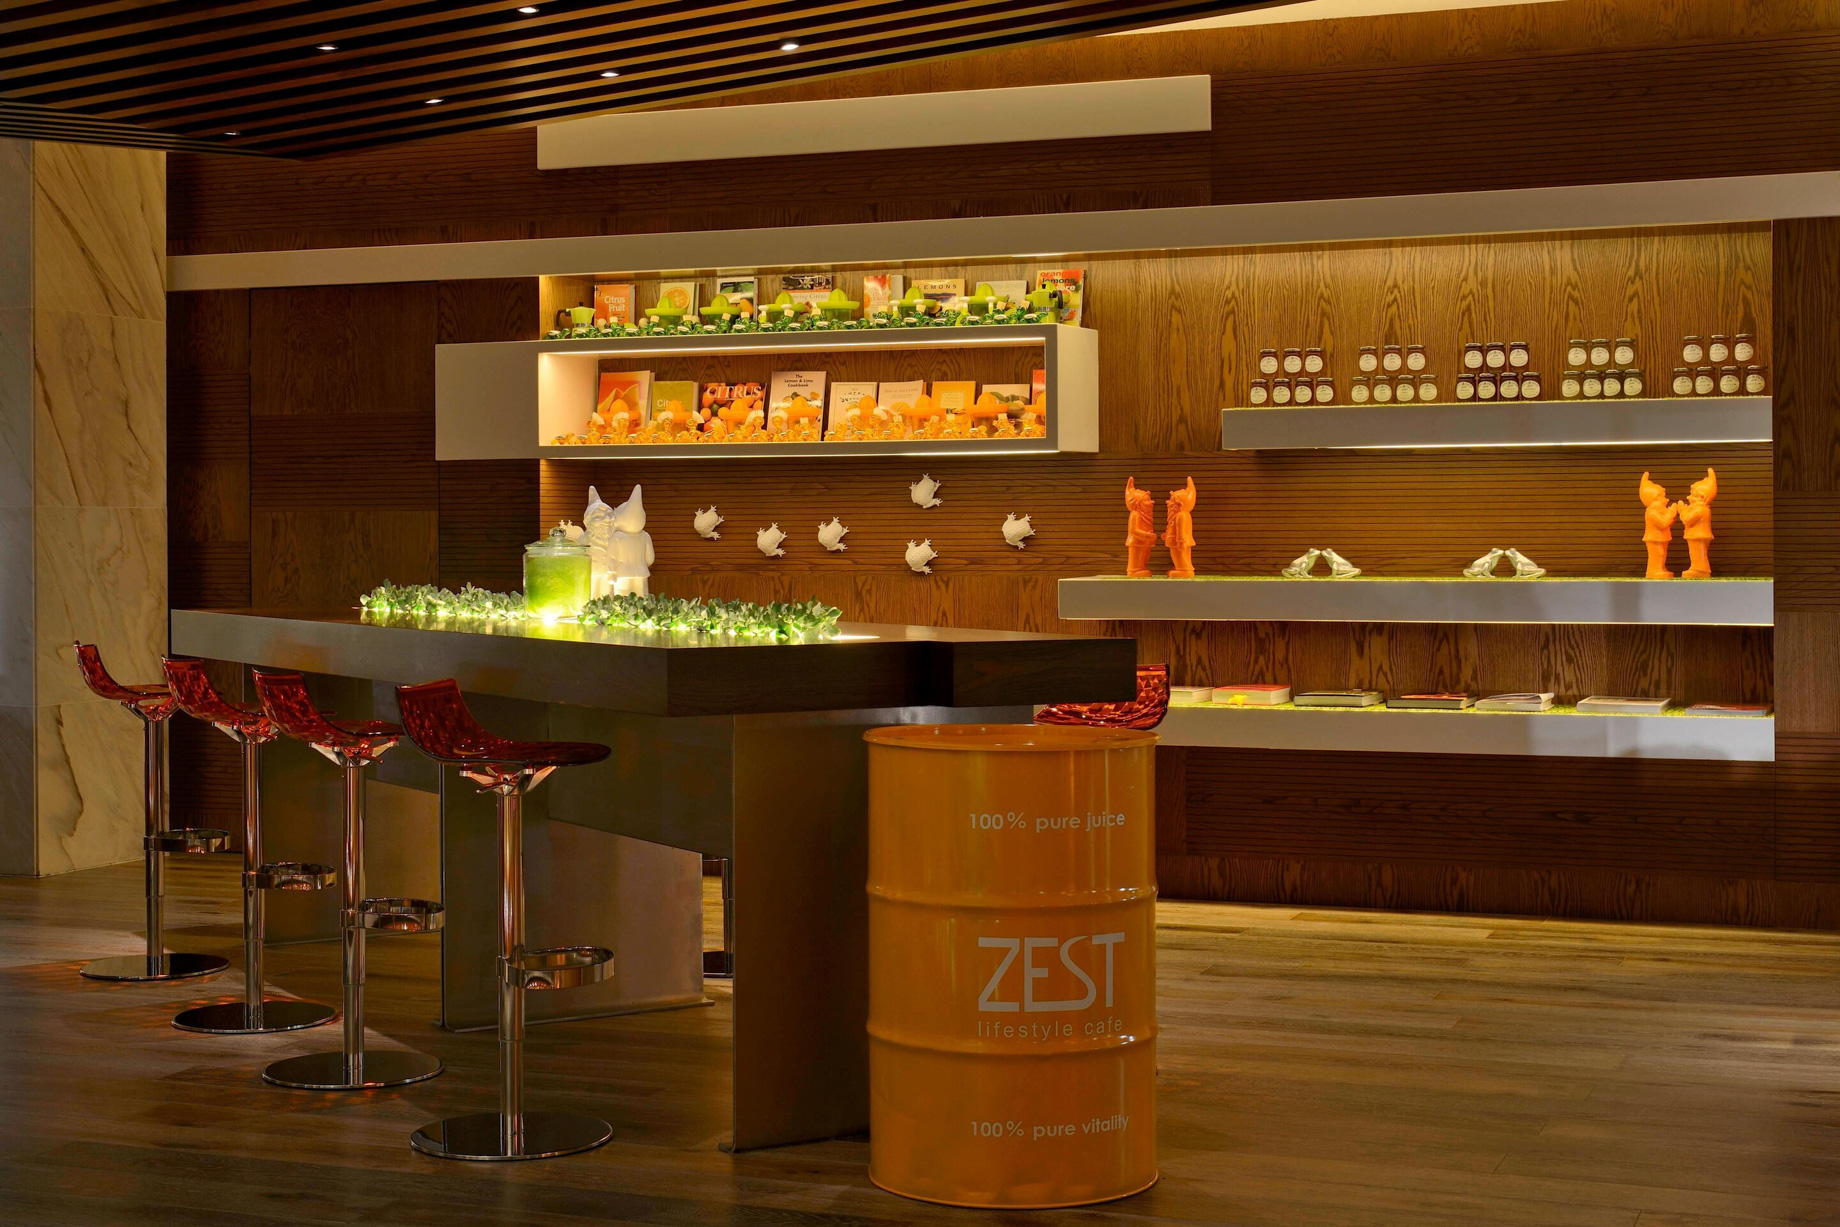 JW Marriott Absheron Baku Hotel – Baku, Azerbaijan – ZEST Lifestyle Cafe Communal Table